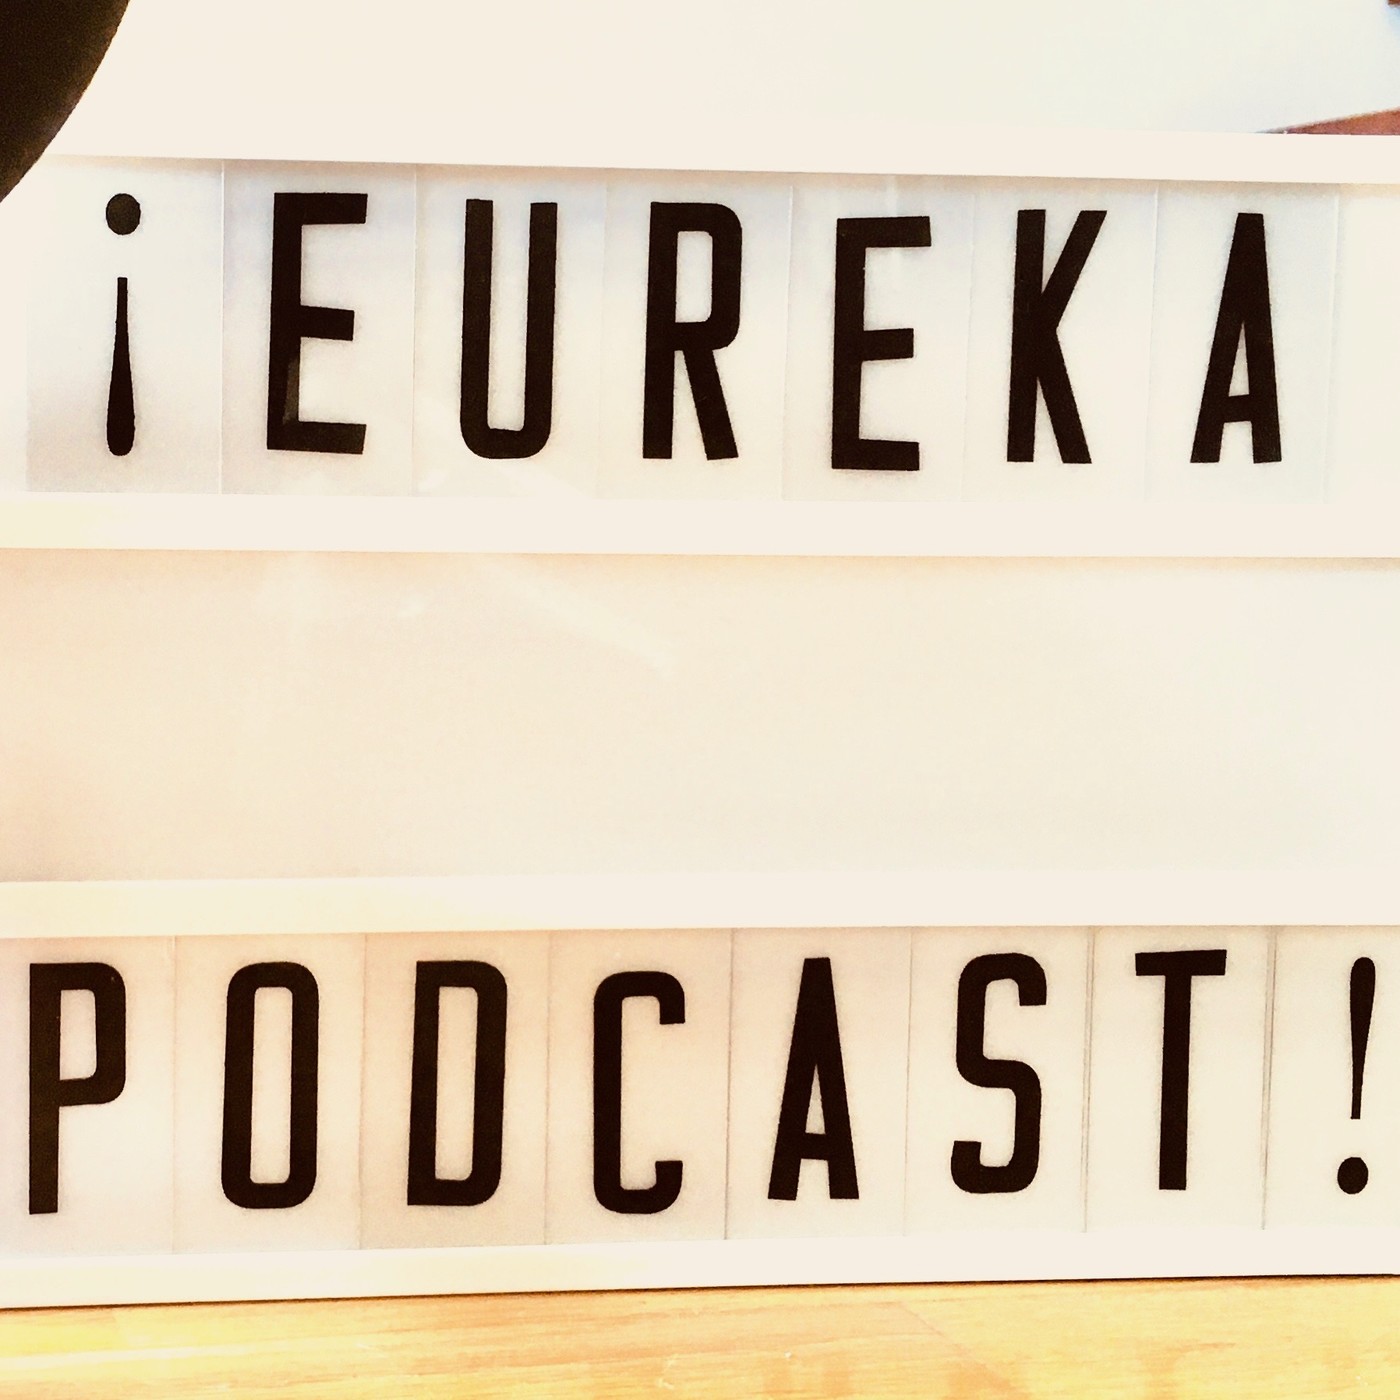 EUREKA PODCAST: El podcast educativo.